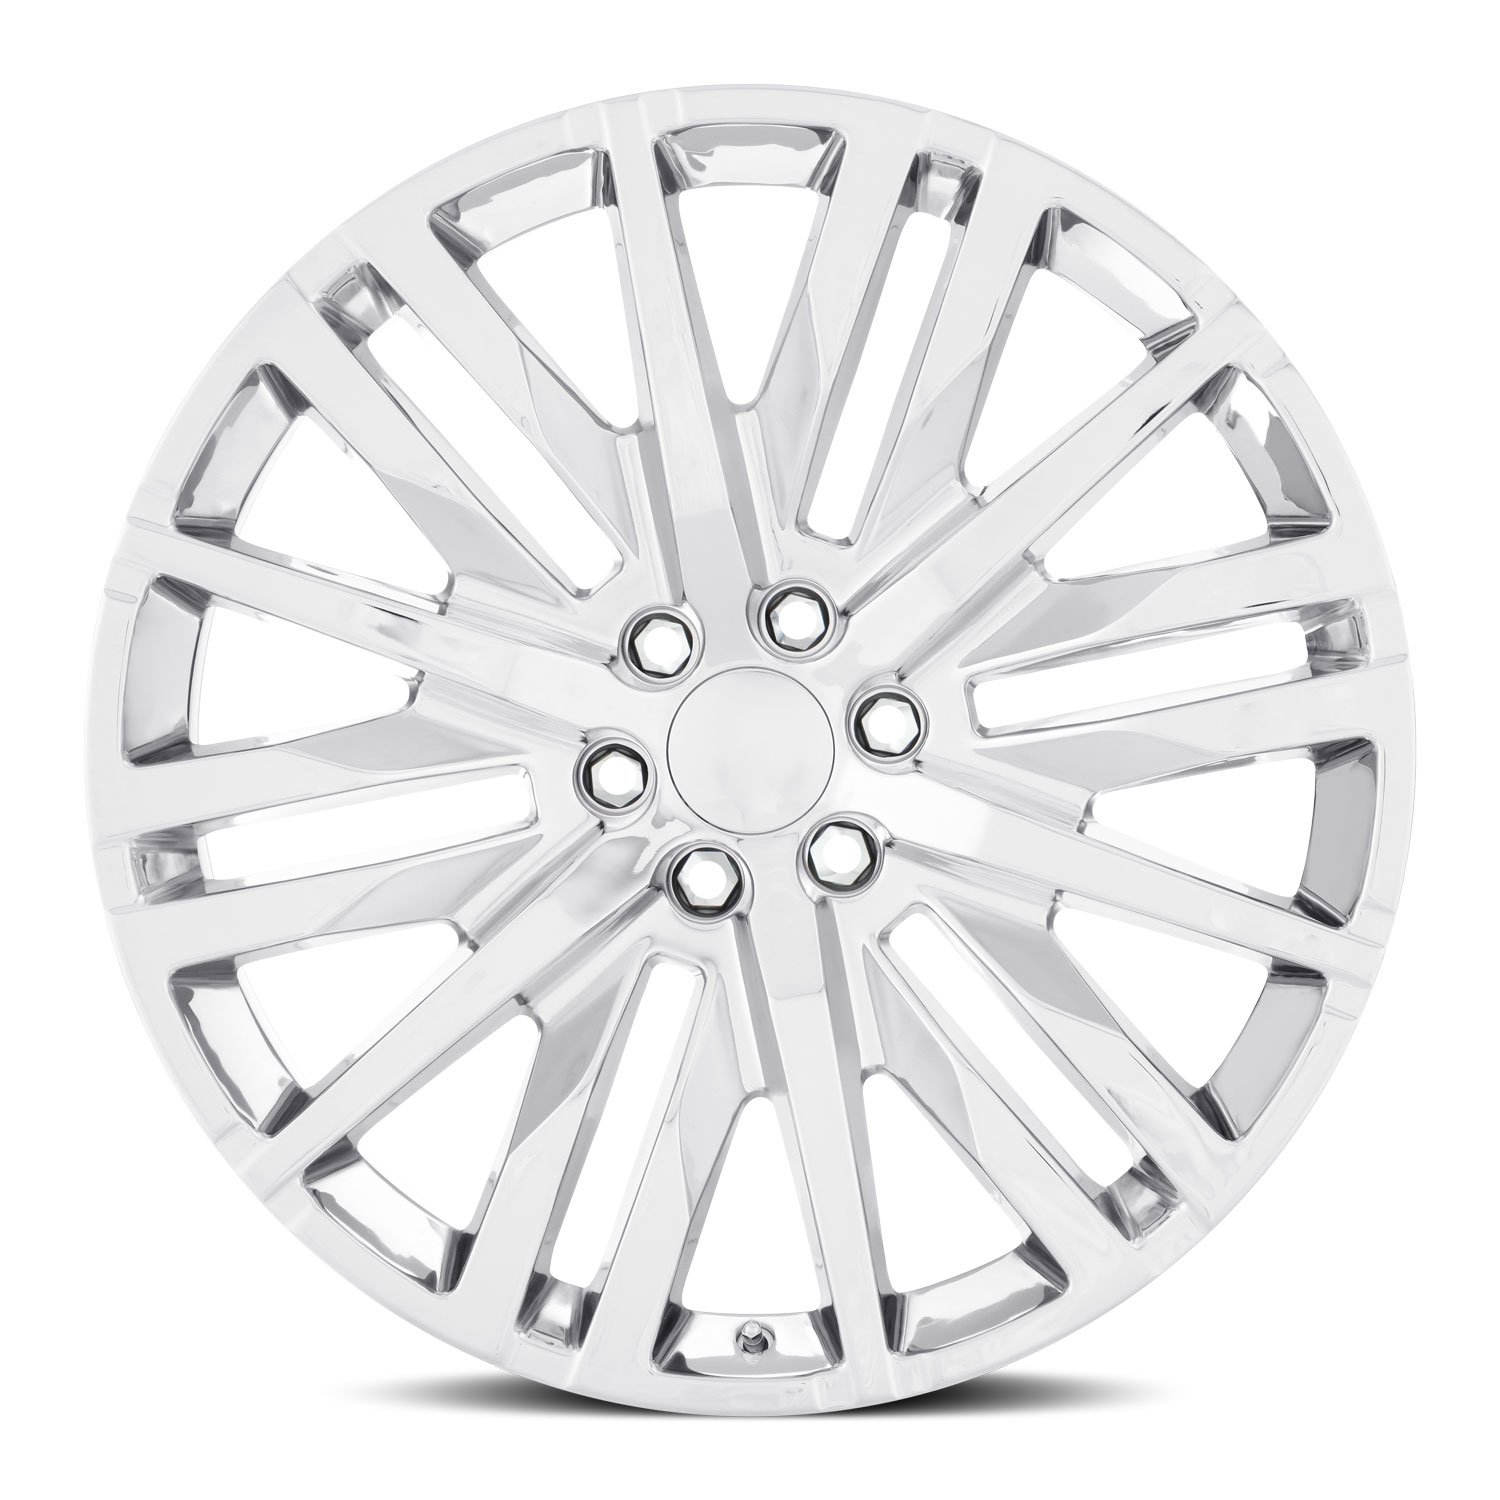 FR97-2410-Chrome-01-GMC-Split-6-spoke-factory-reproductions-wheels-rims-face-1500